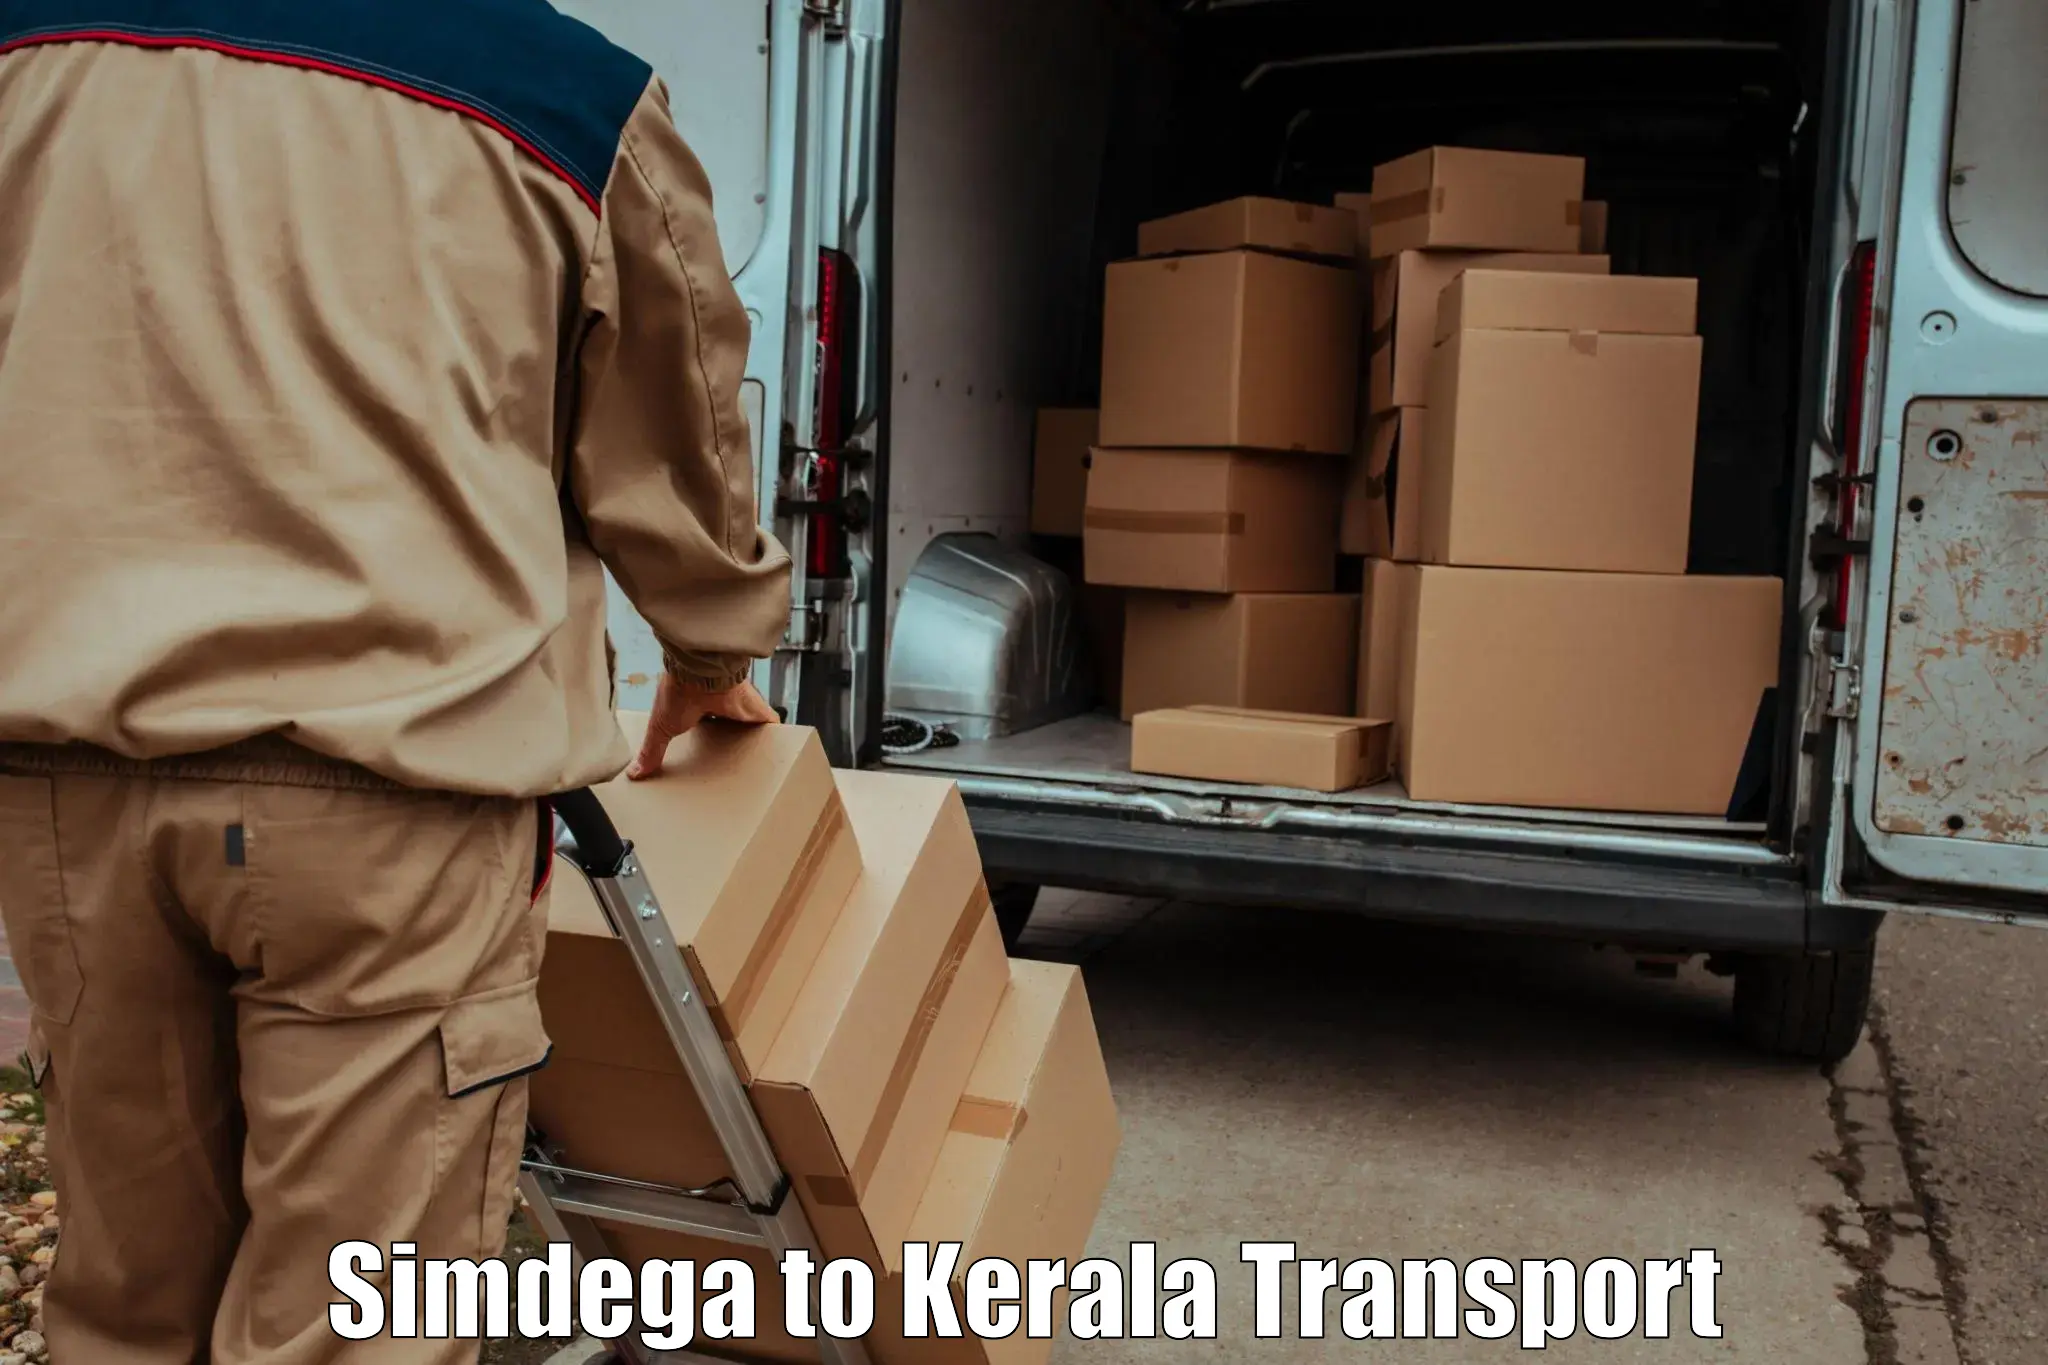 Road transport online services Simdega to Kakkur